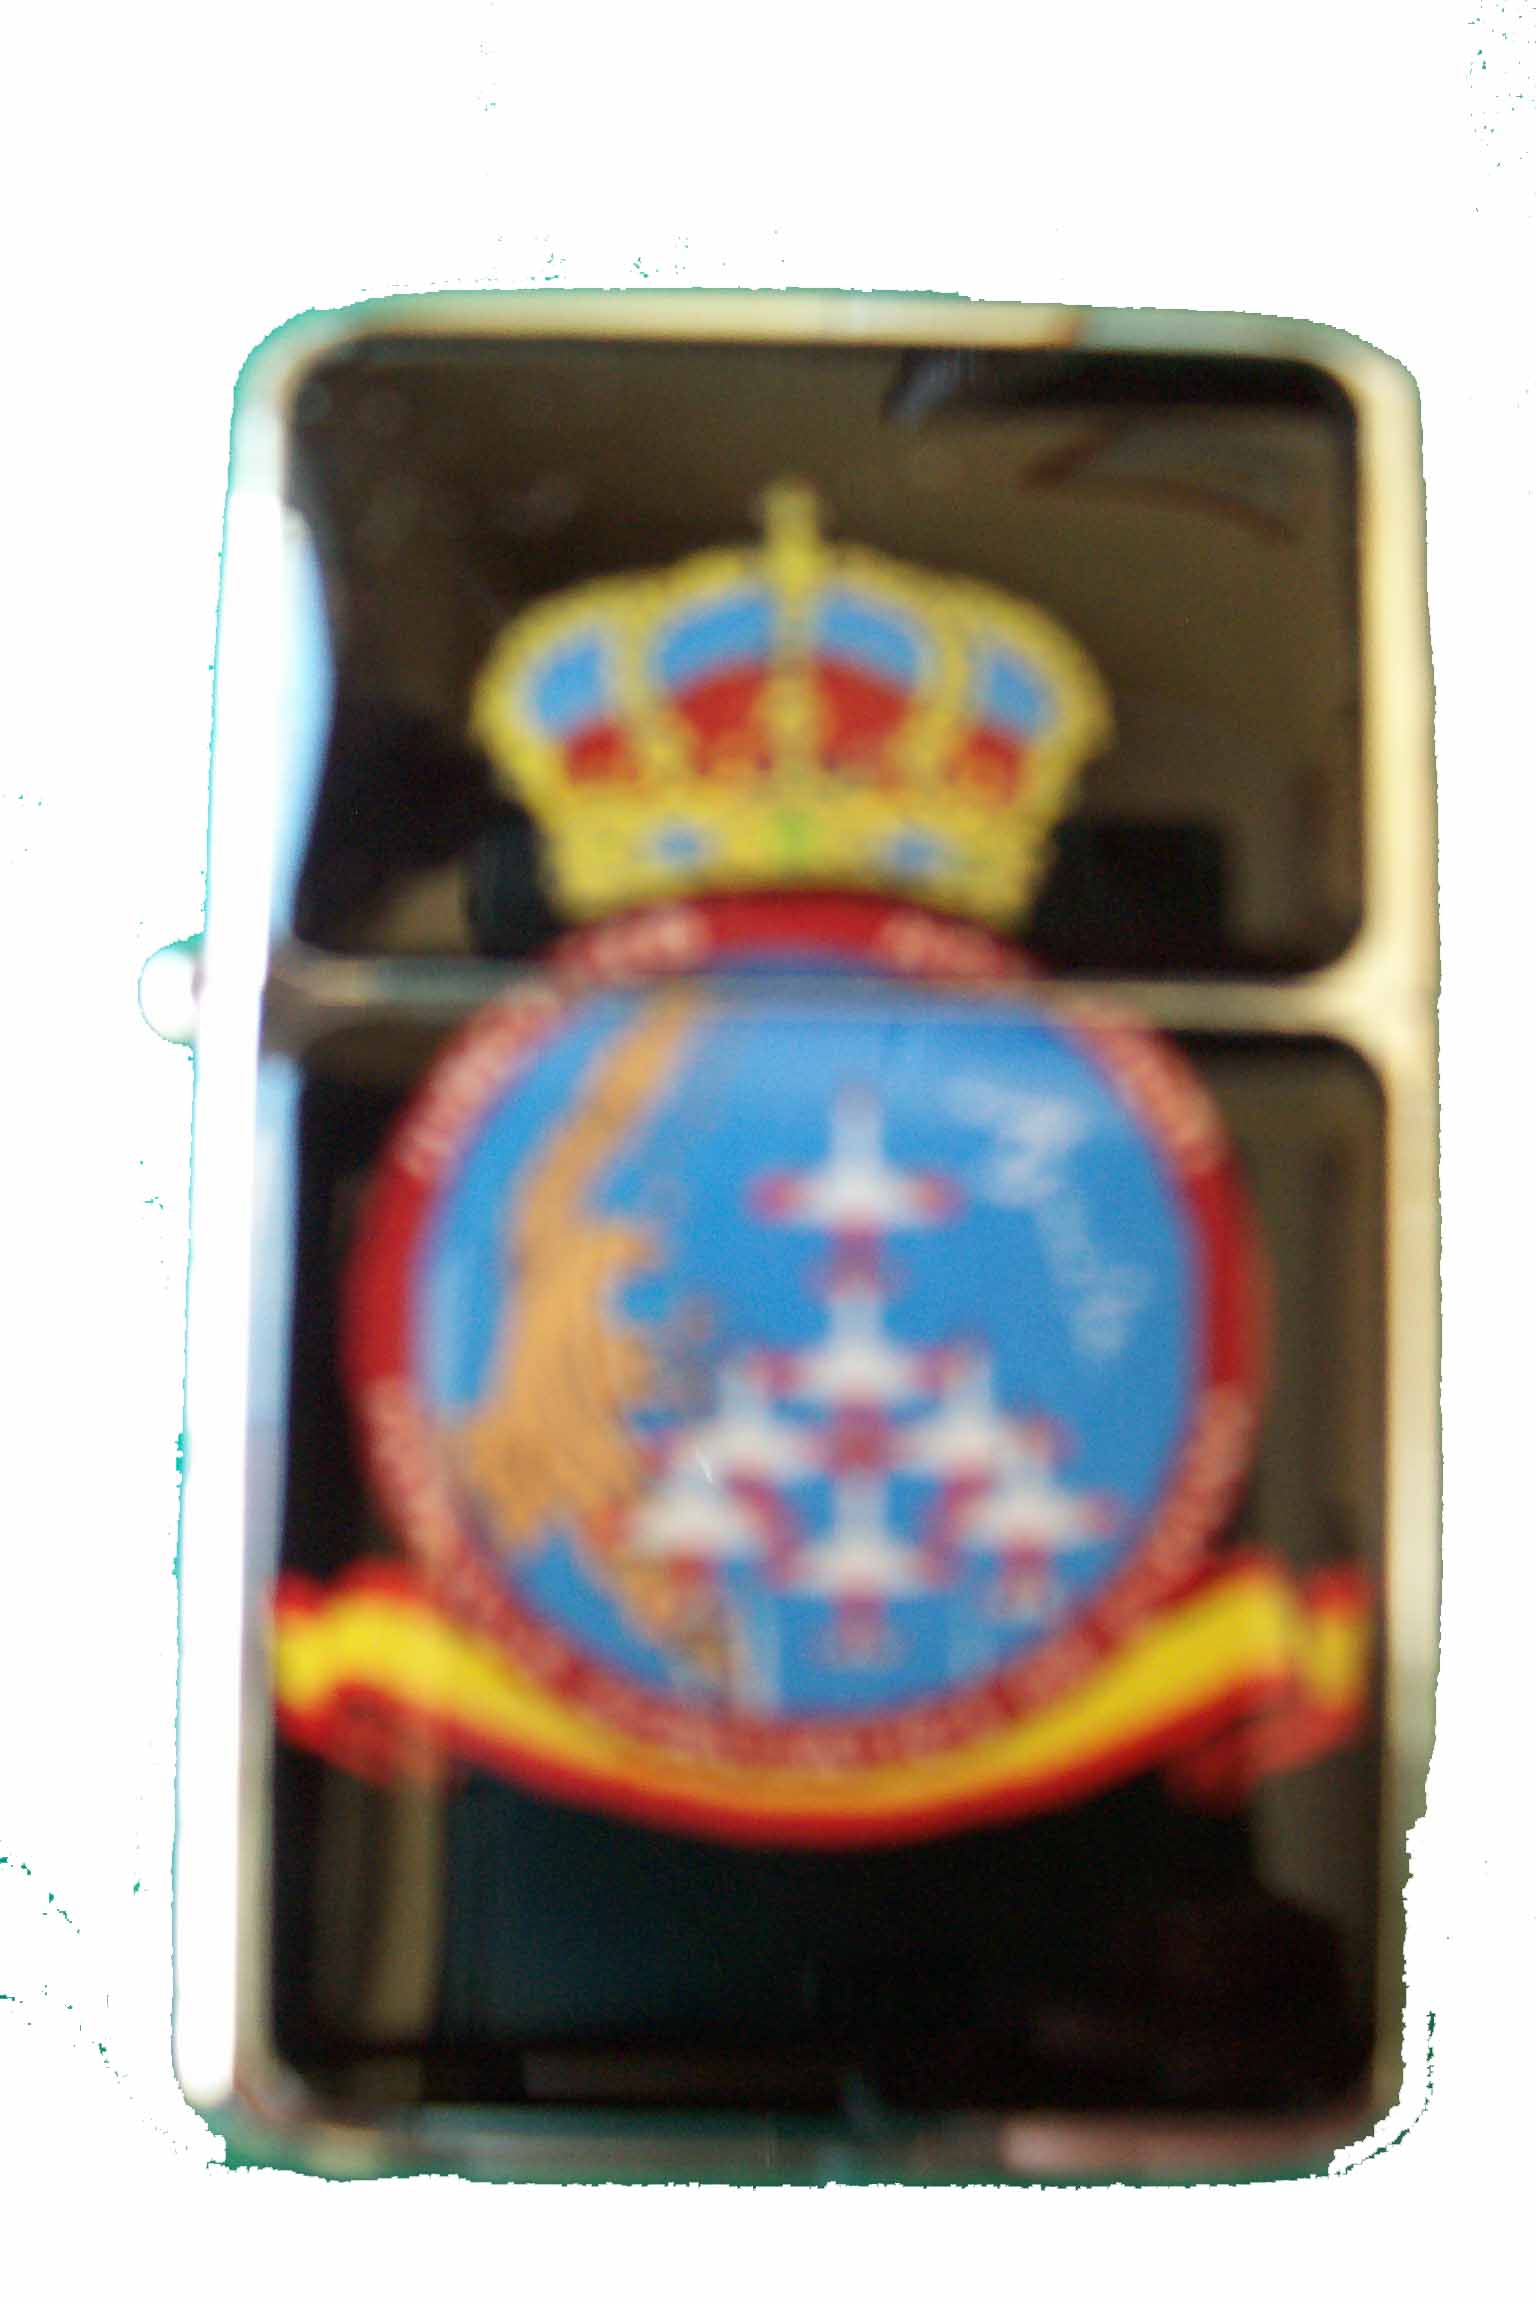 Mechero modelo Zippo con el escudo de la Patrulla Aguila.